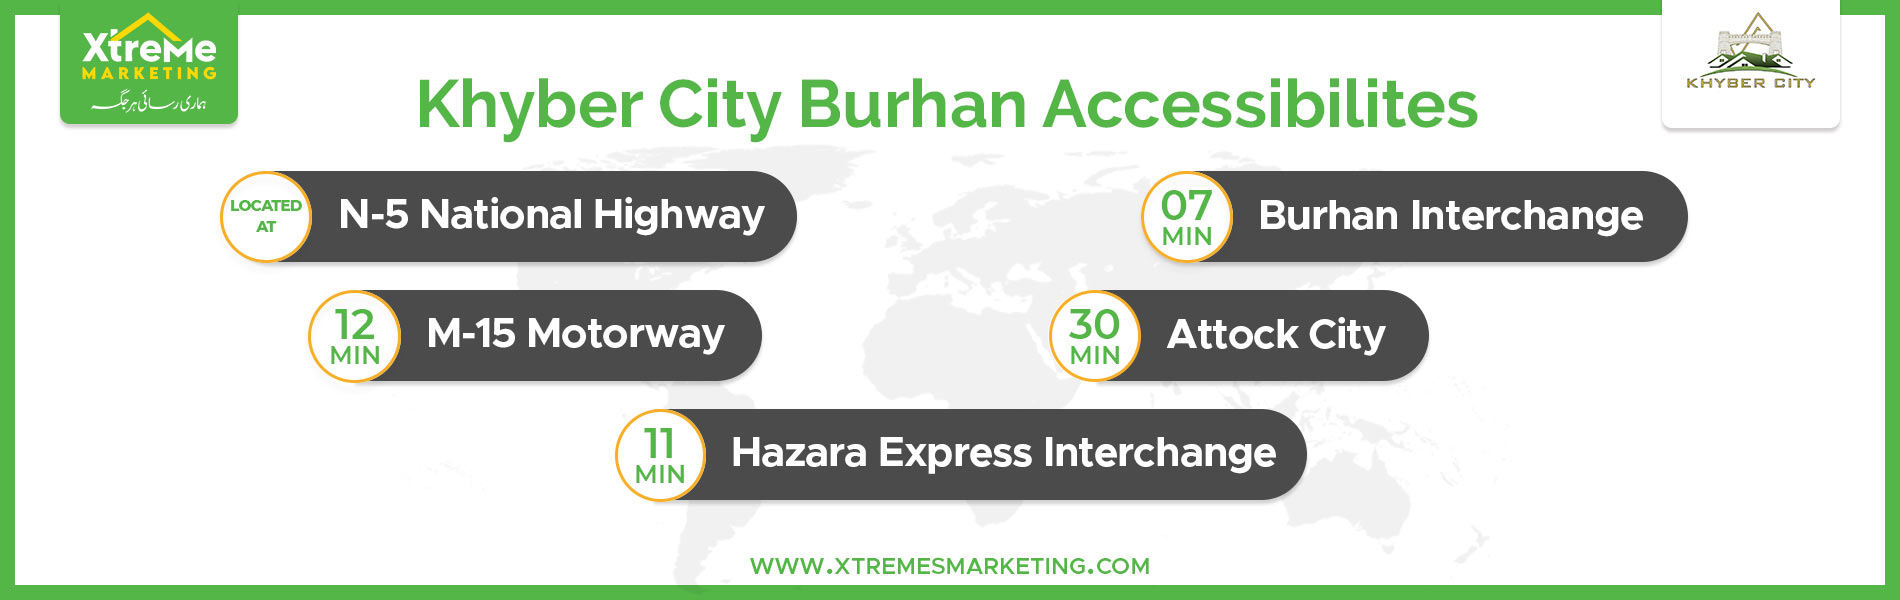 Khyber City Burhan Accessibilites